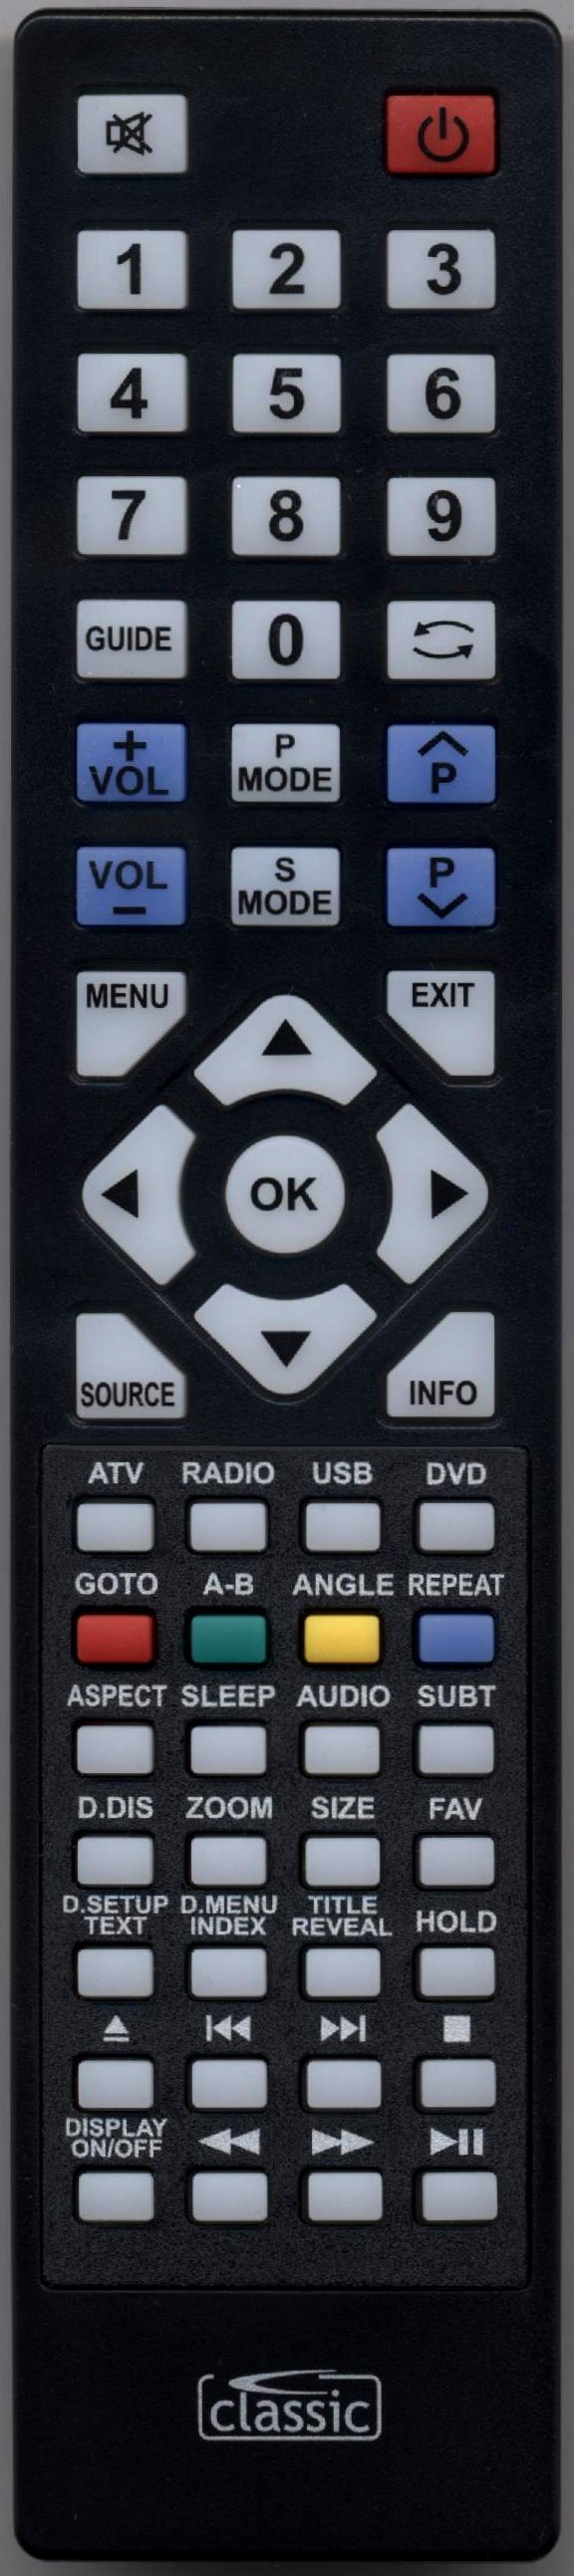 UMC X216/54G-GW-TCDU-UK Remote Control Alternative